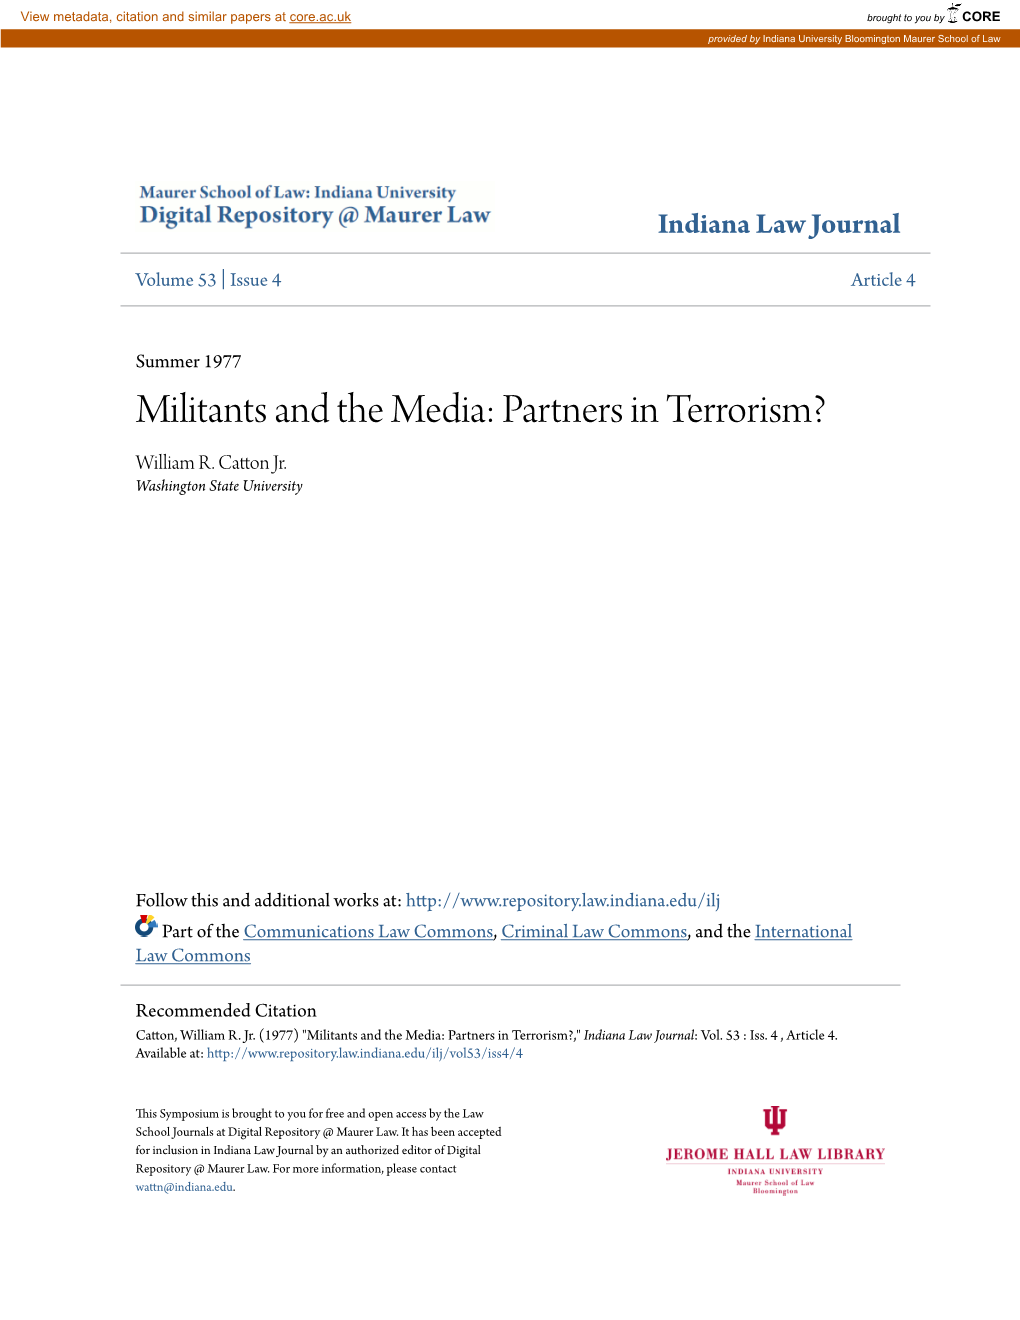 Militants and the Media: Partners in Terrorism? William R